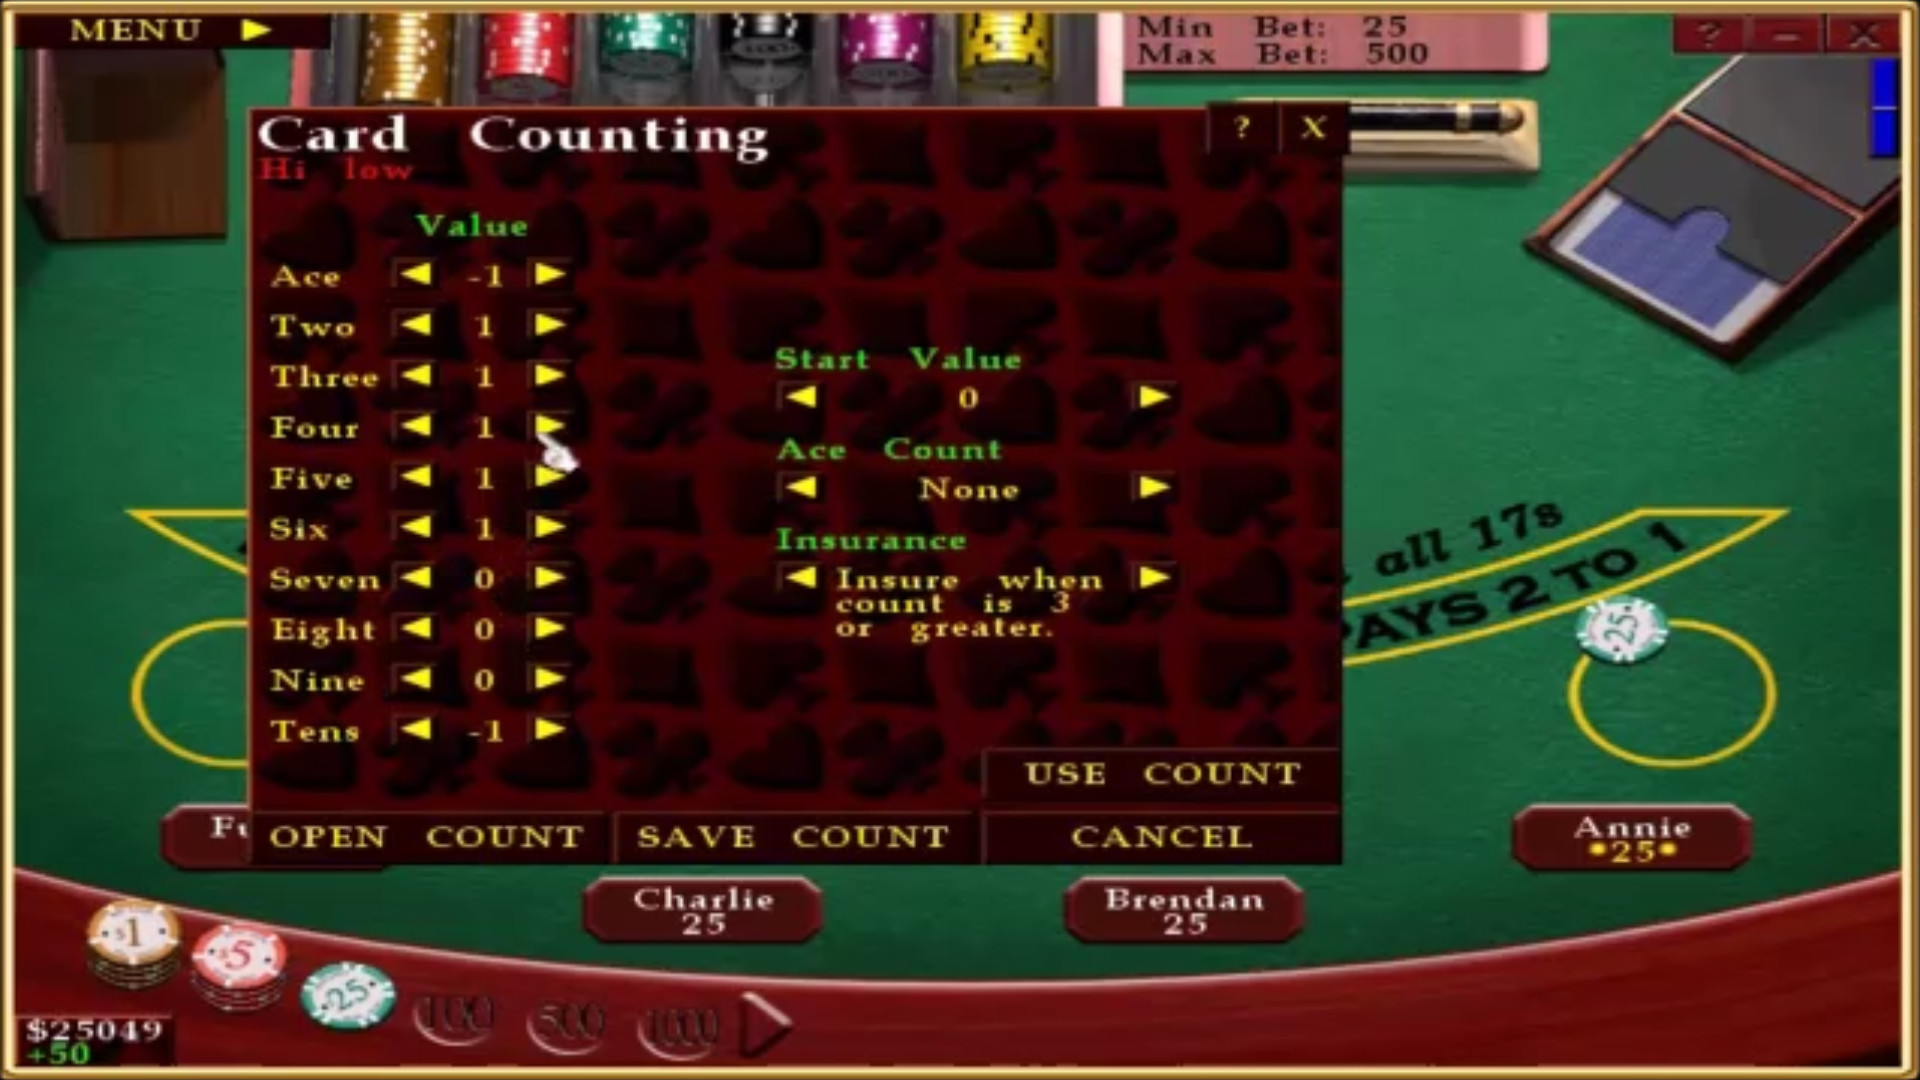 best way to win at casino blackjack